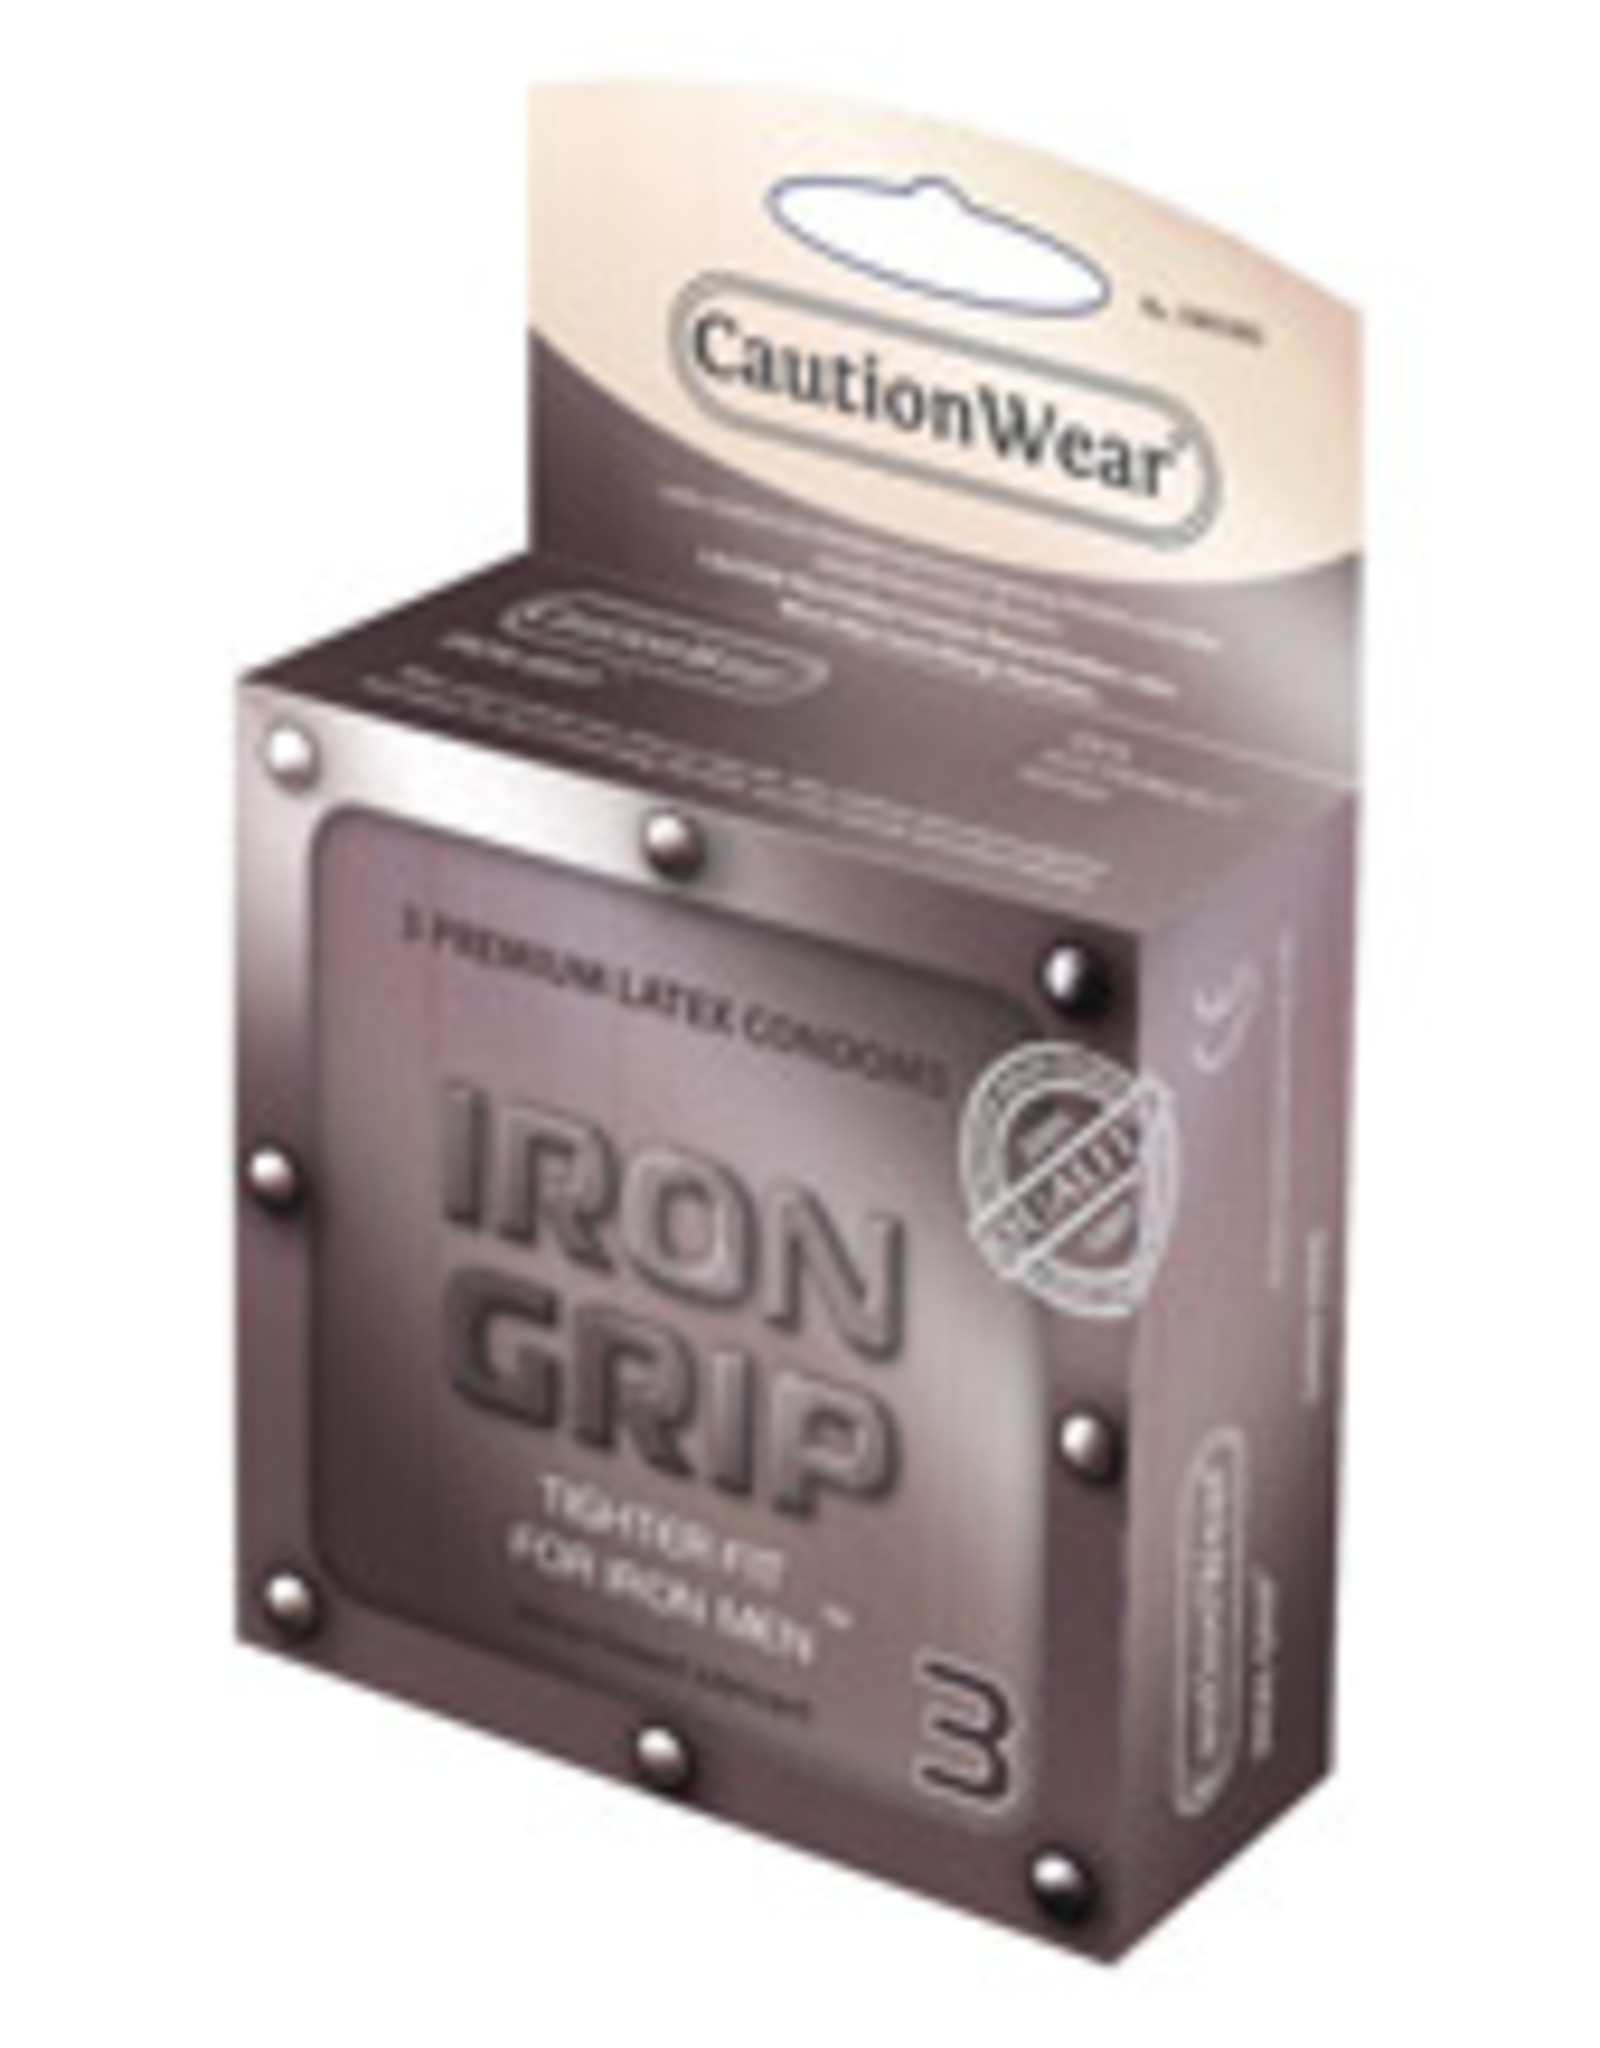 CautionWear Caution Wear Iron Grip Snug Fit 3pk